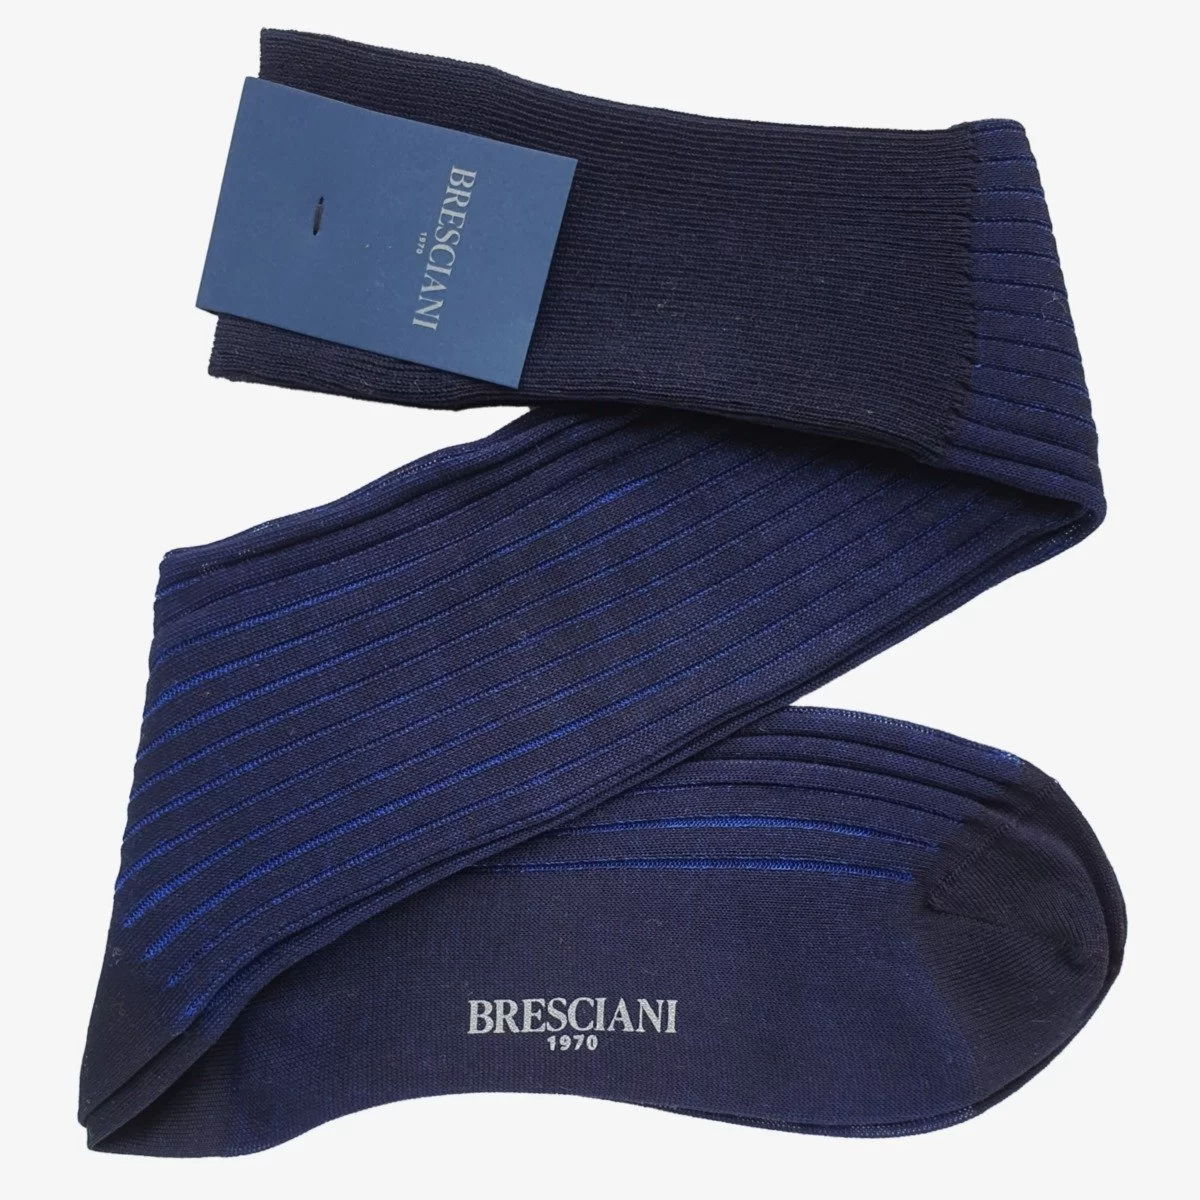 Bresciani Mario navy and blue ribbed striped knee-high socks